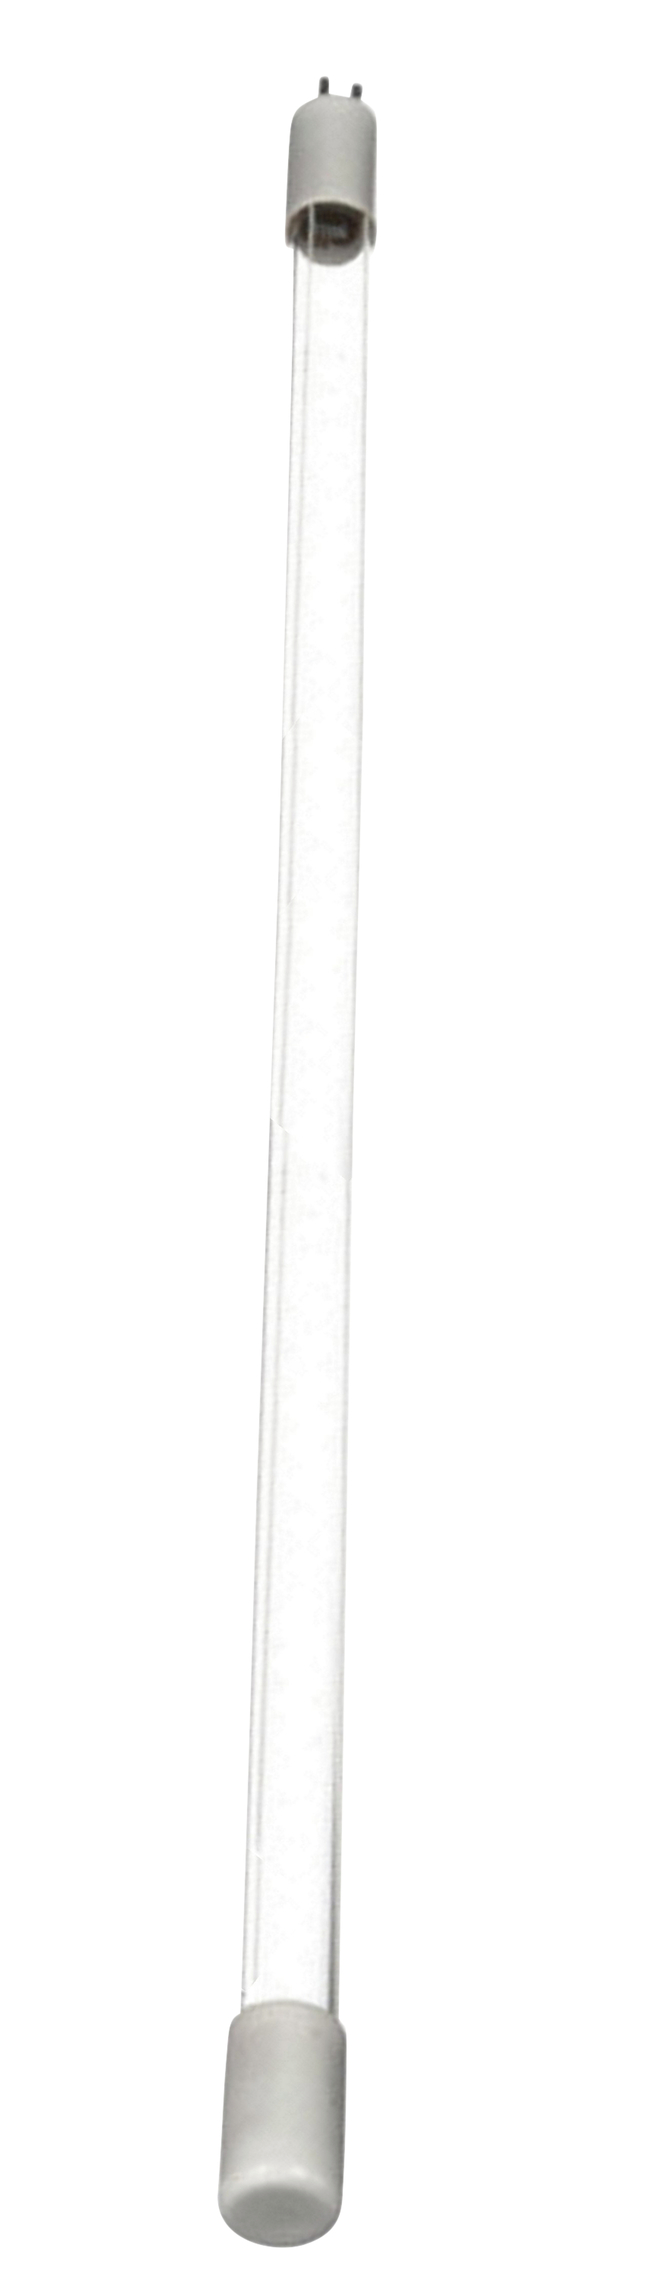 Adibot-A Shatterproof UV-C Lamps - Long, Item Number 2100645